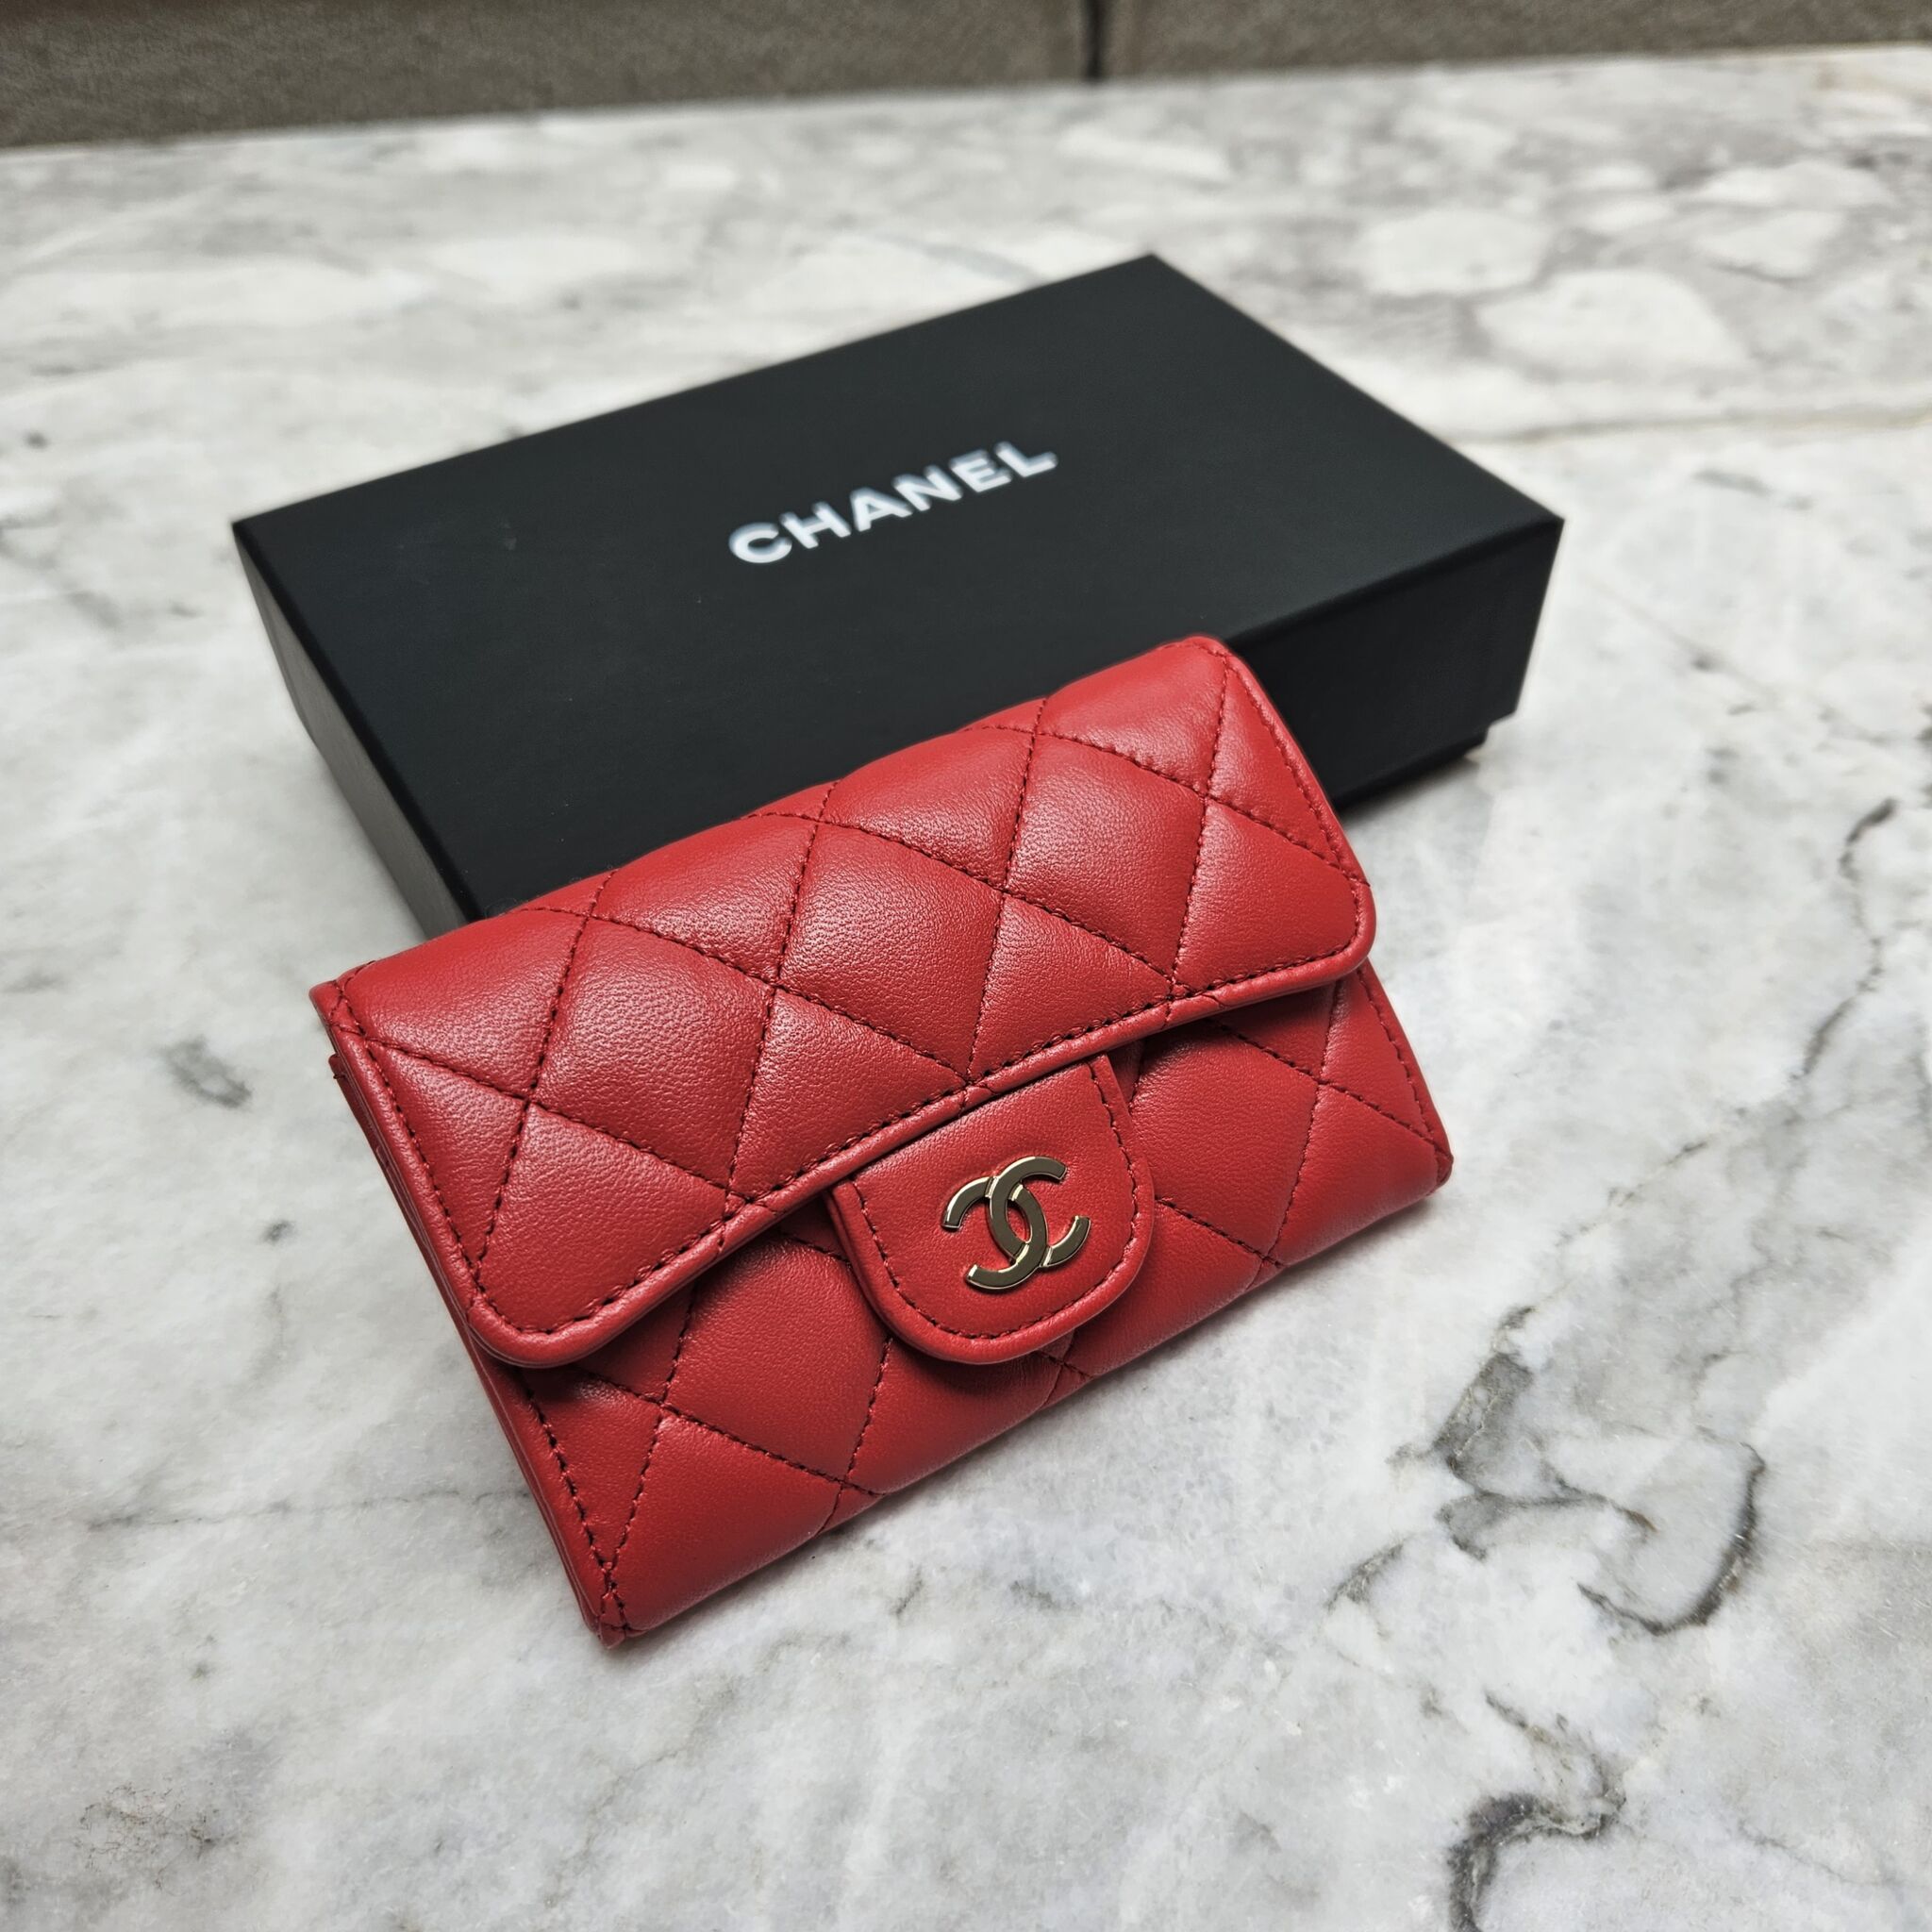 Chanel classic card holder - Gem